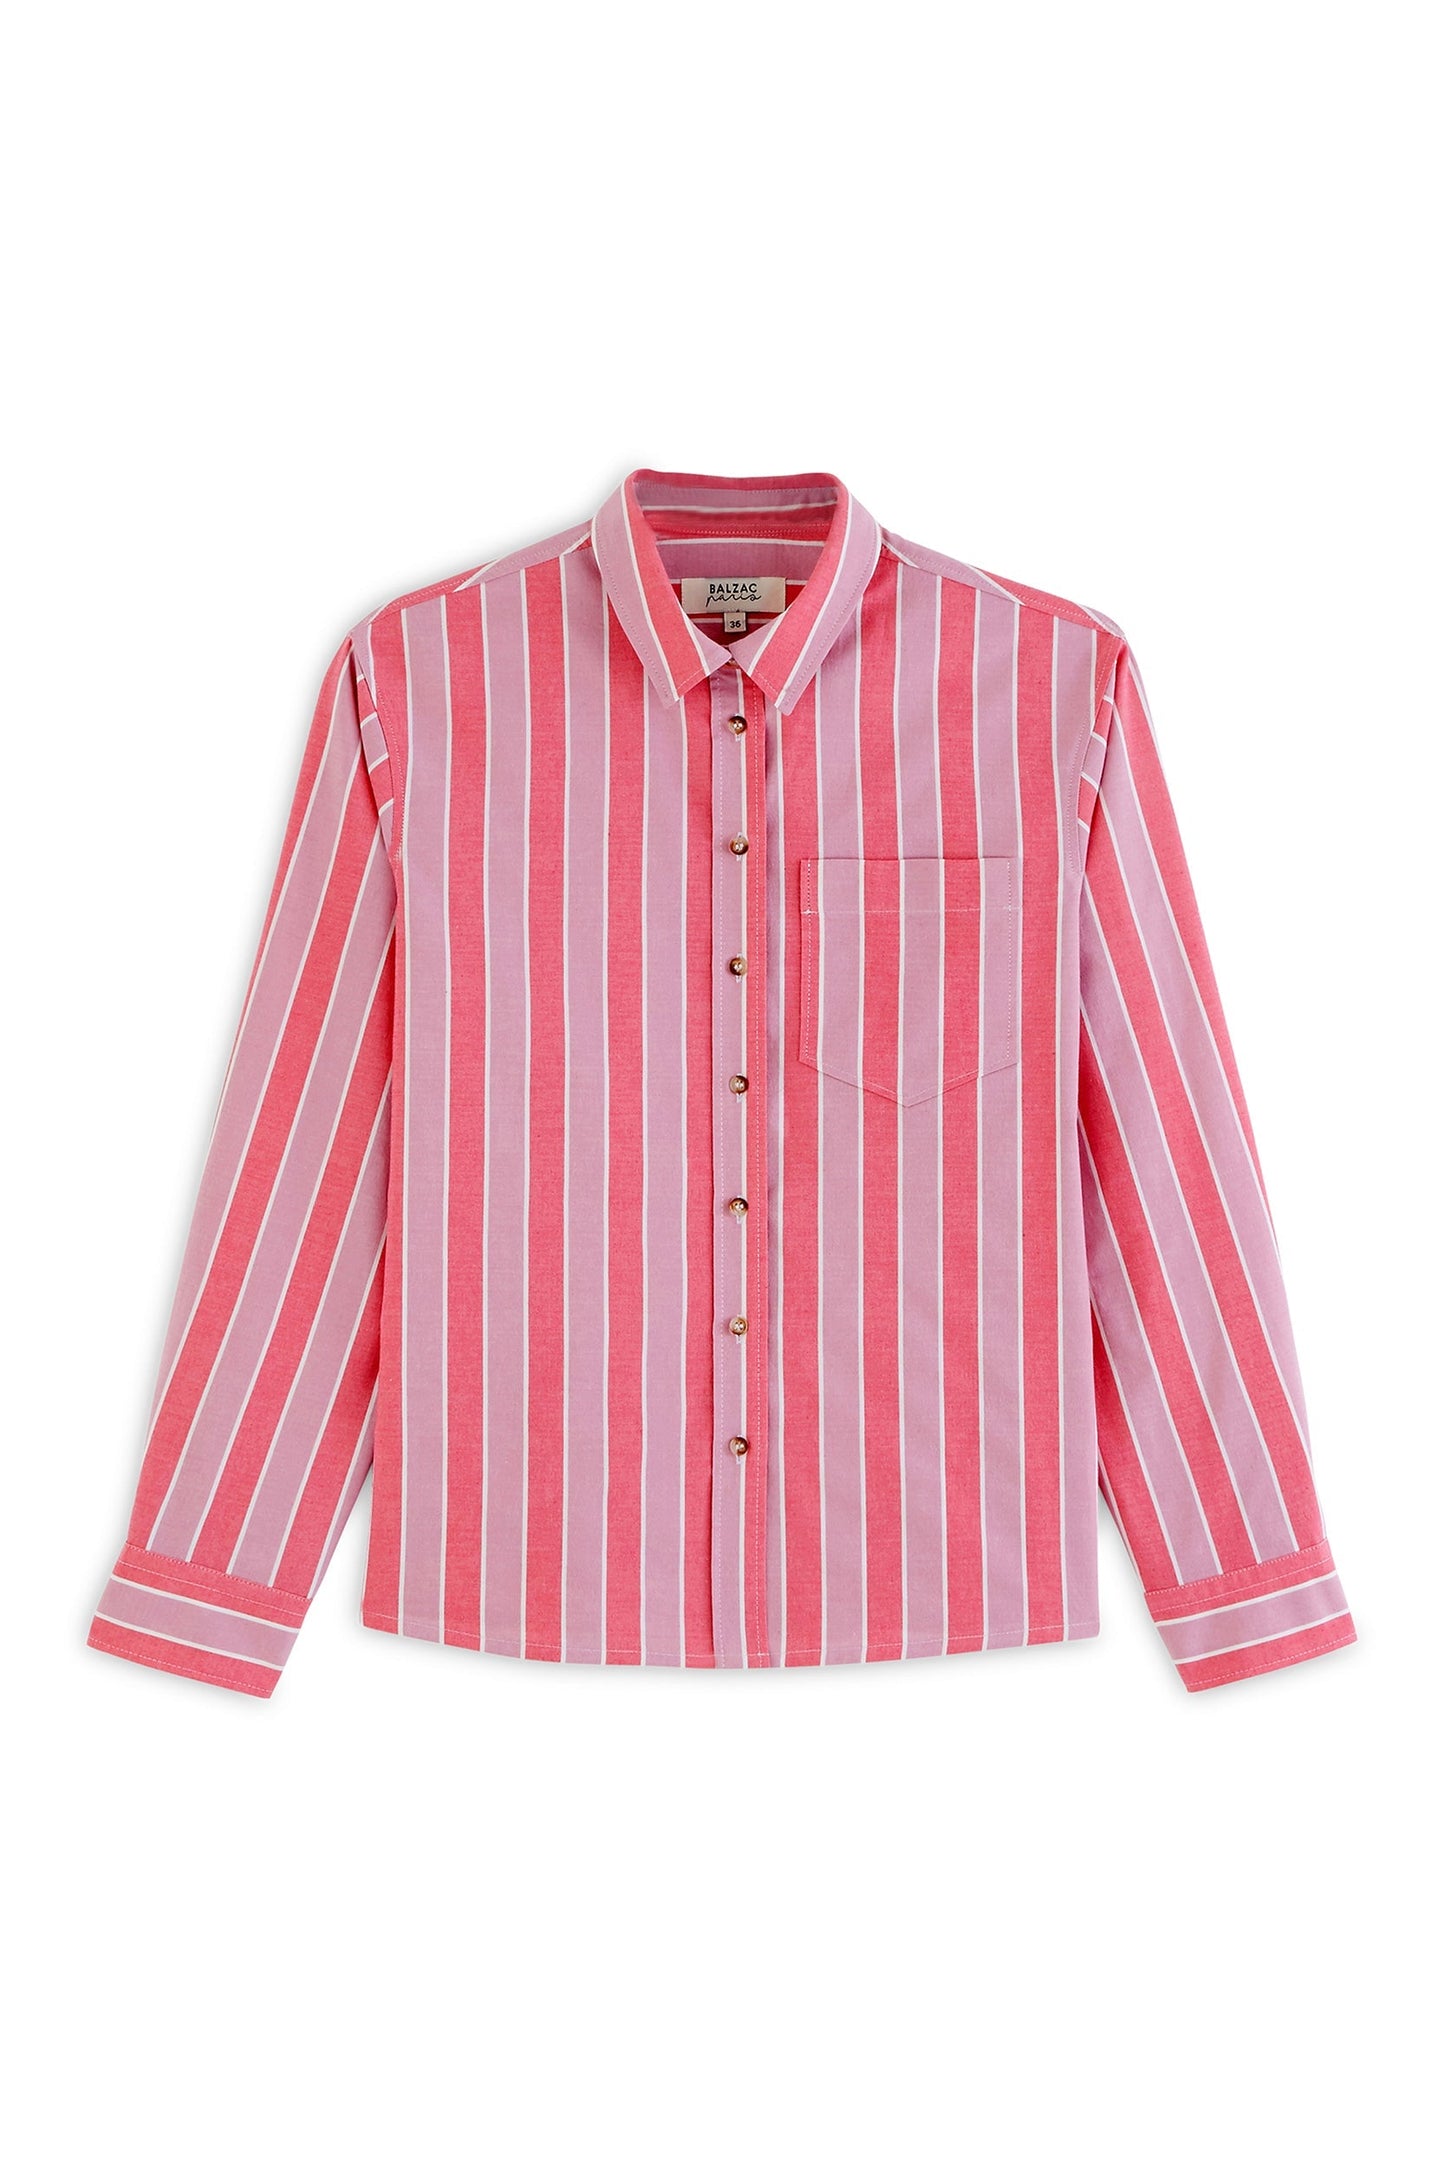 Liberte shirt with pink stripes